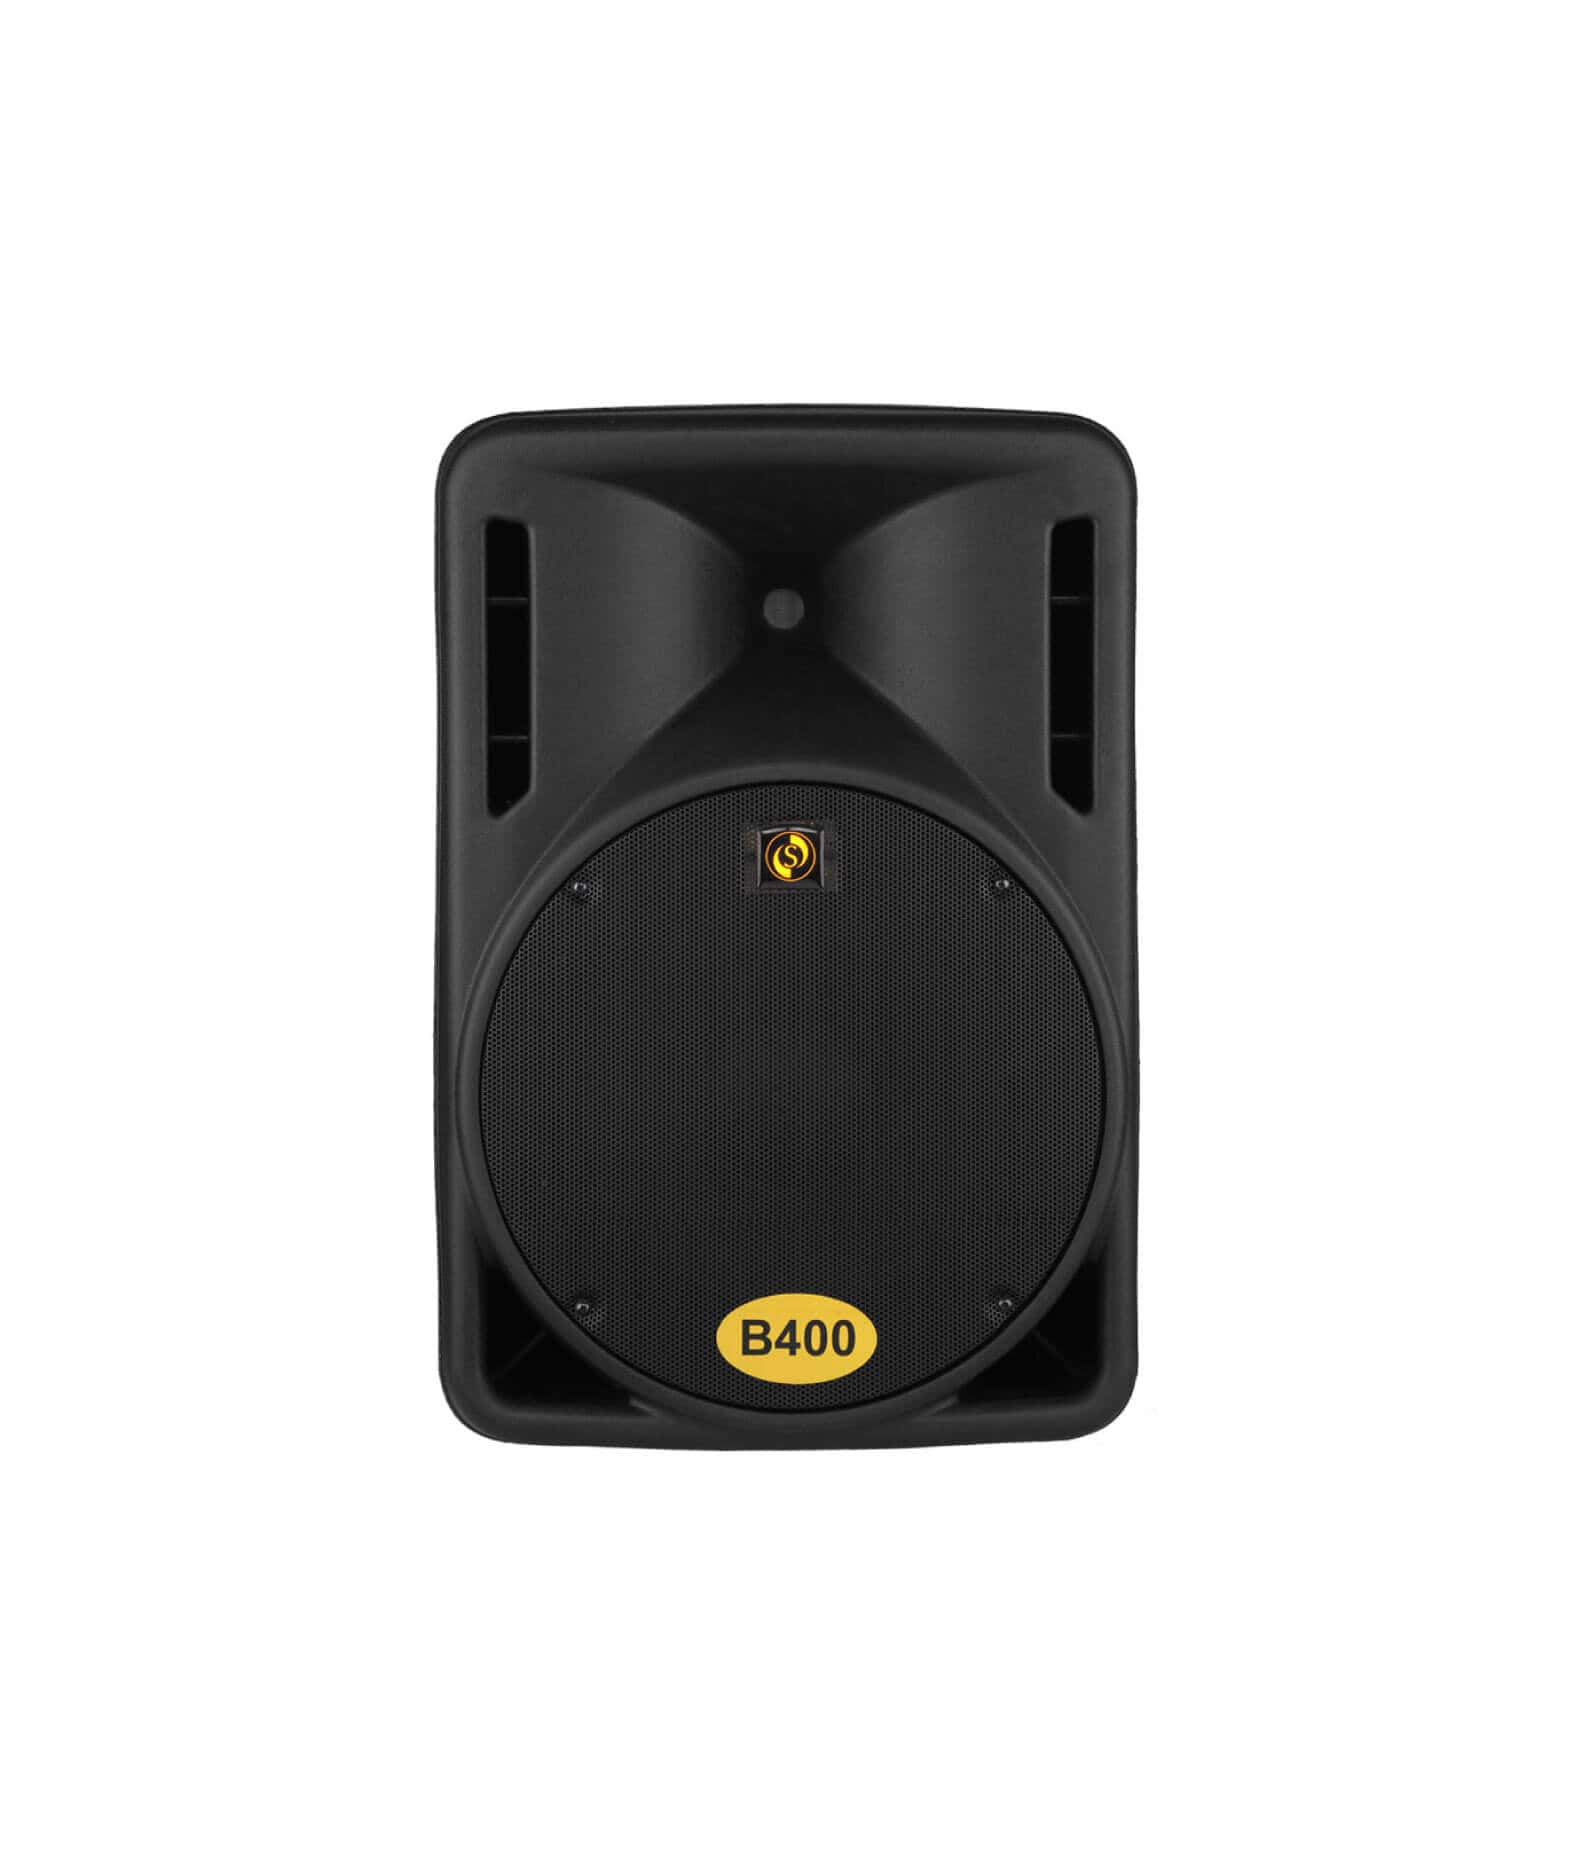 studiomaster active speakers price